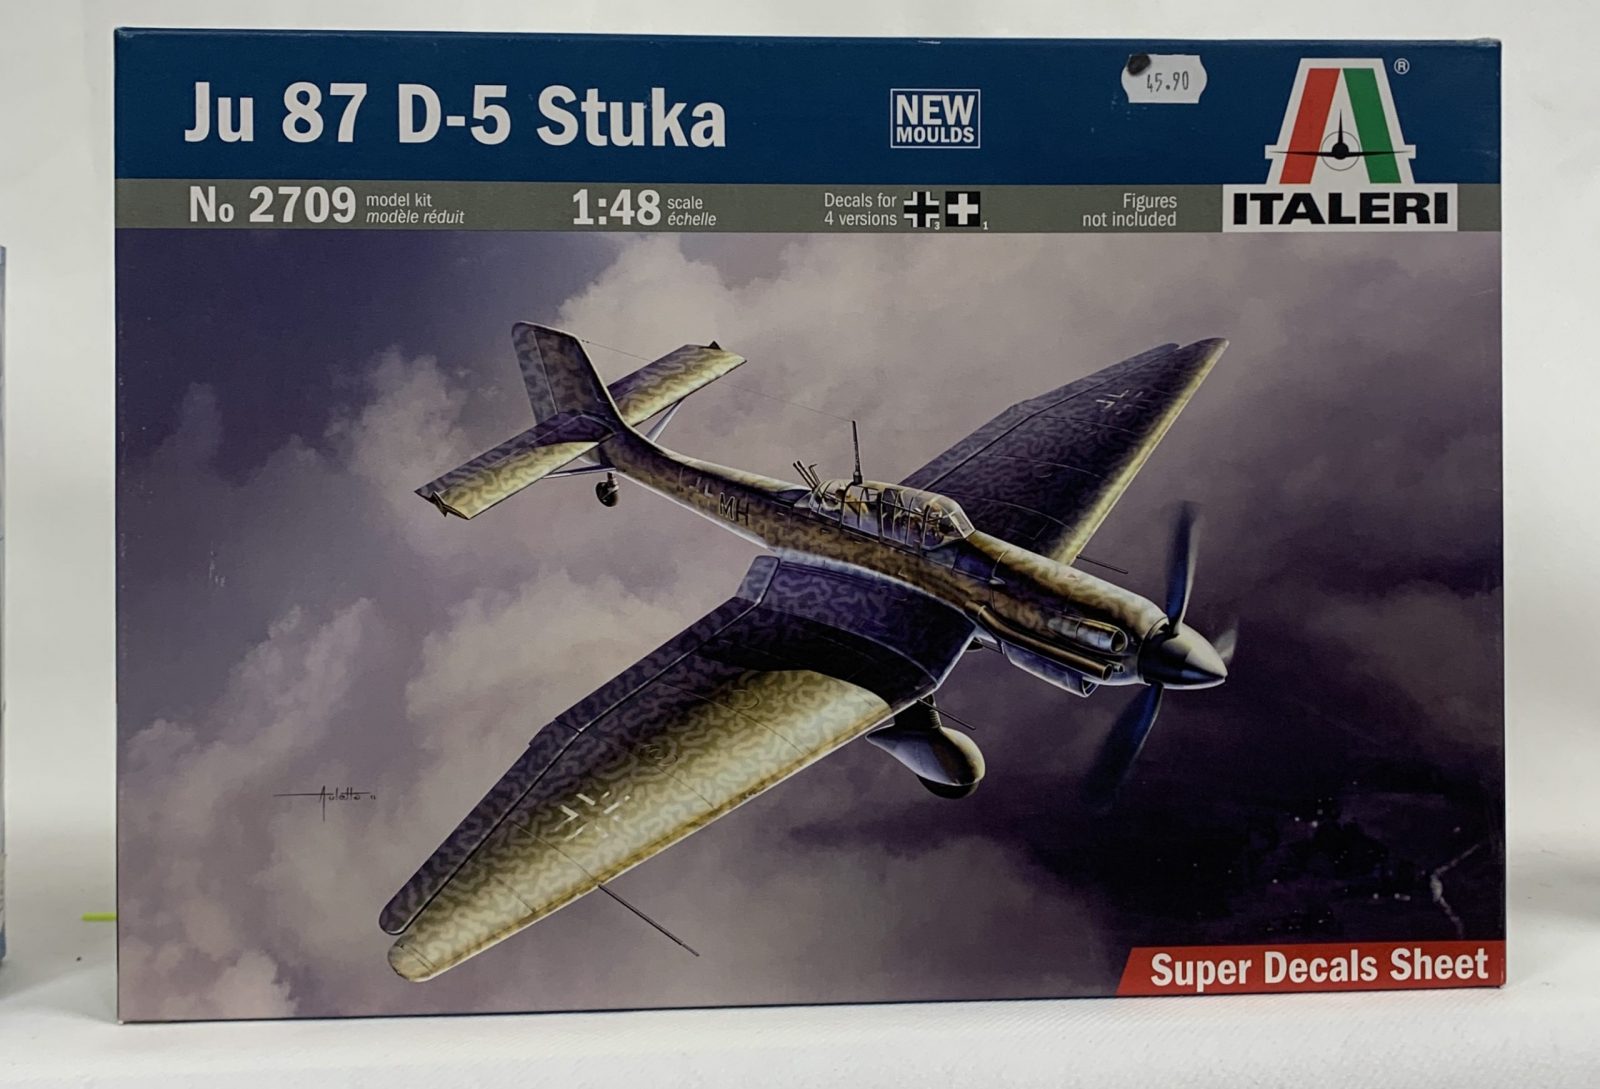 Ju 87 D-5 Stuka